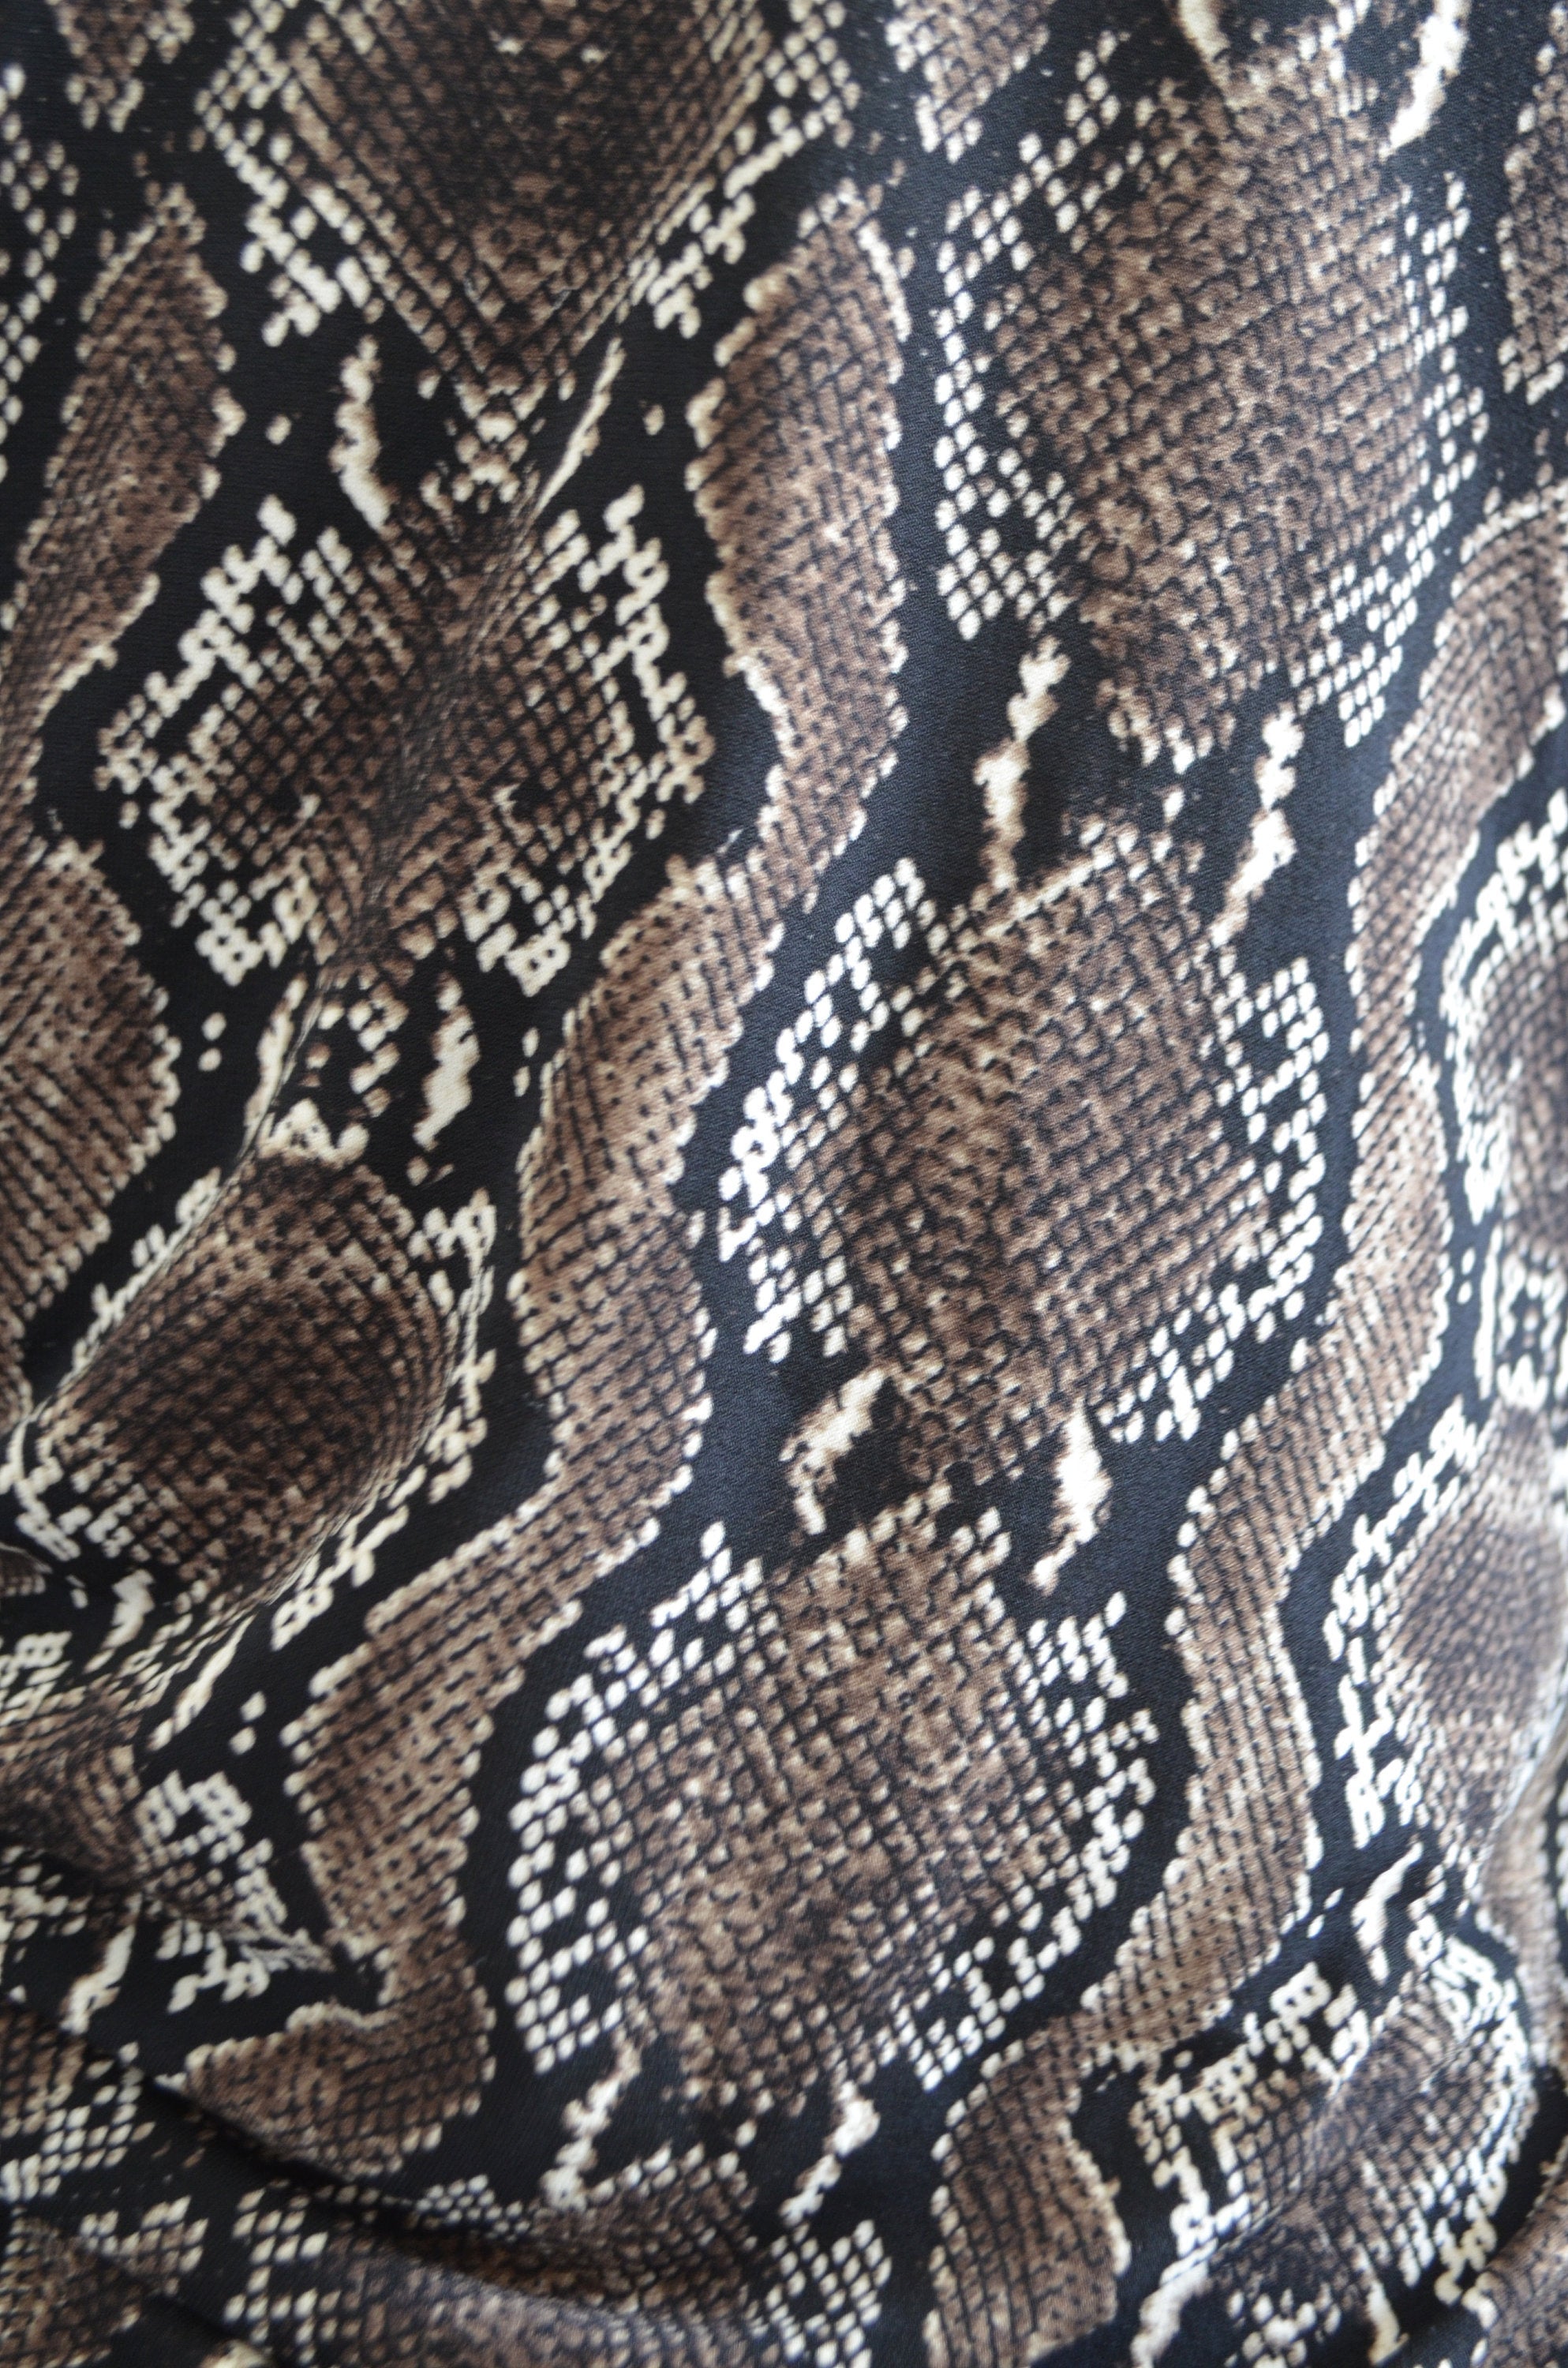 Calvin Klein Snake Wrap Pleated Print Dress 3/4 Sleeves Bodycon Sheath Dress Designer Size 8-10